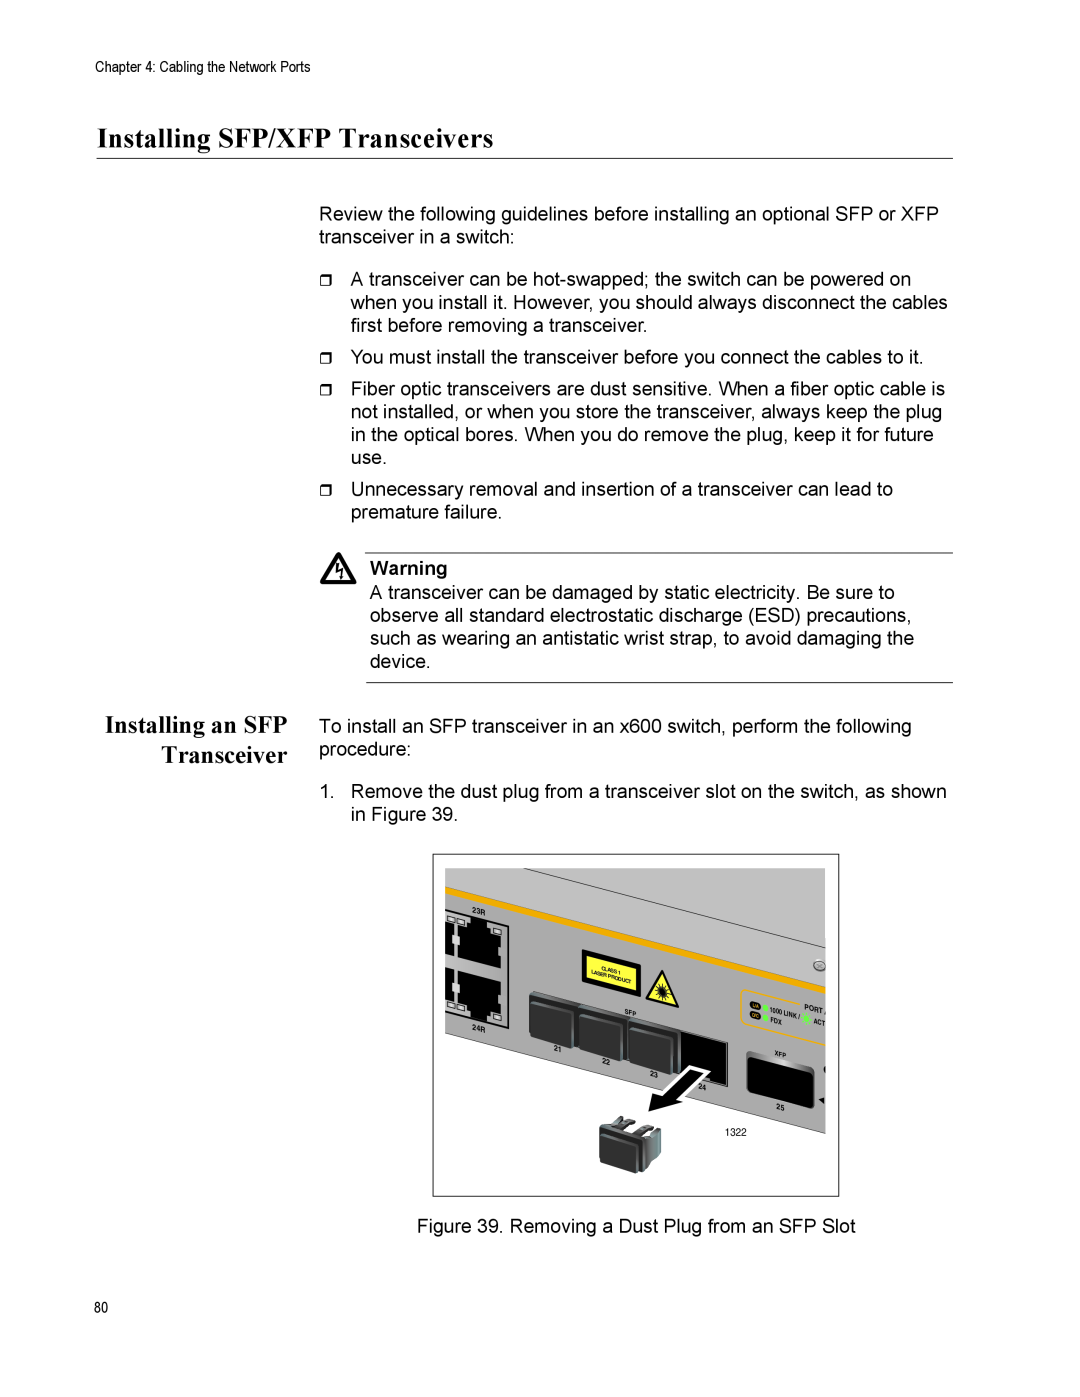 Allied Telesis x600-24Ts-POE manual Installing SFP/XFP Transceivers, Installing an SFP Transceiver 